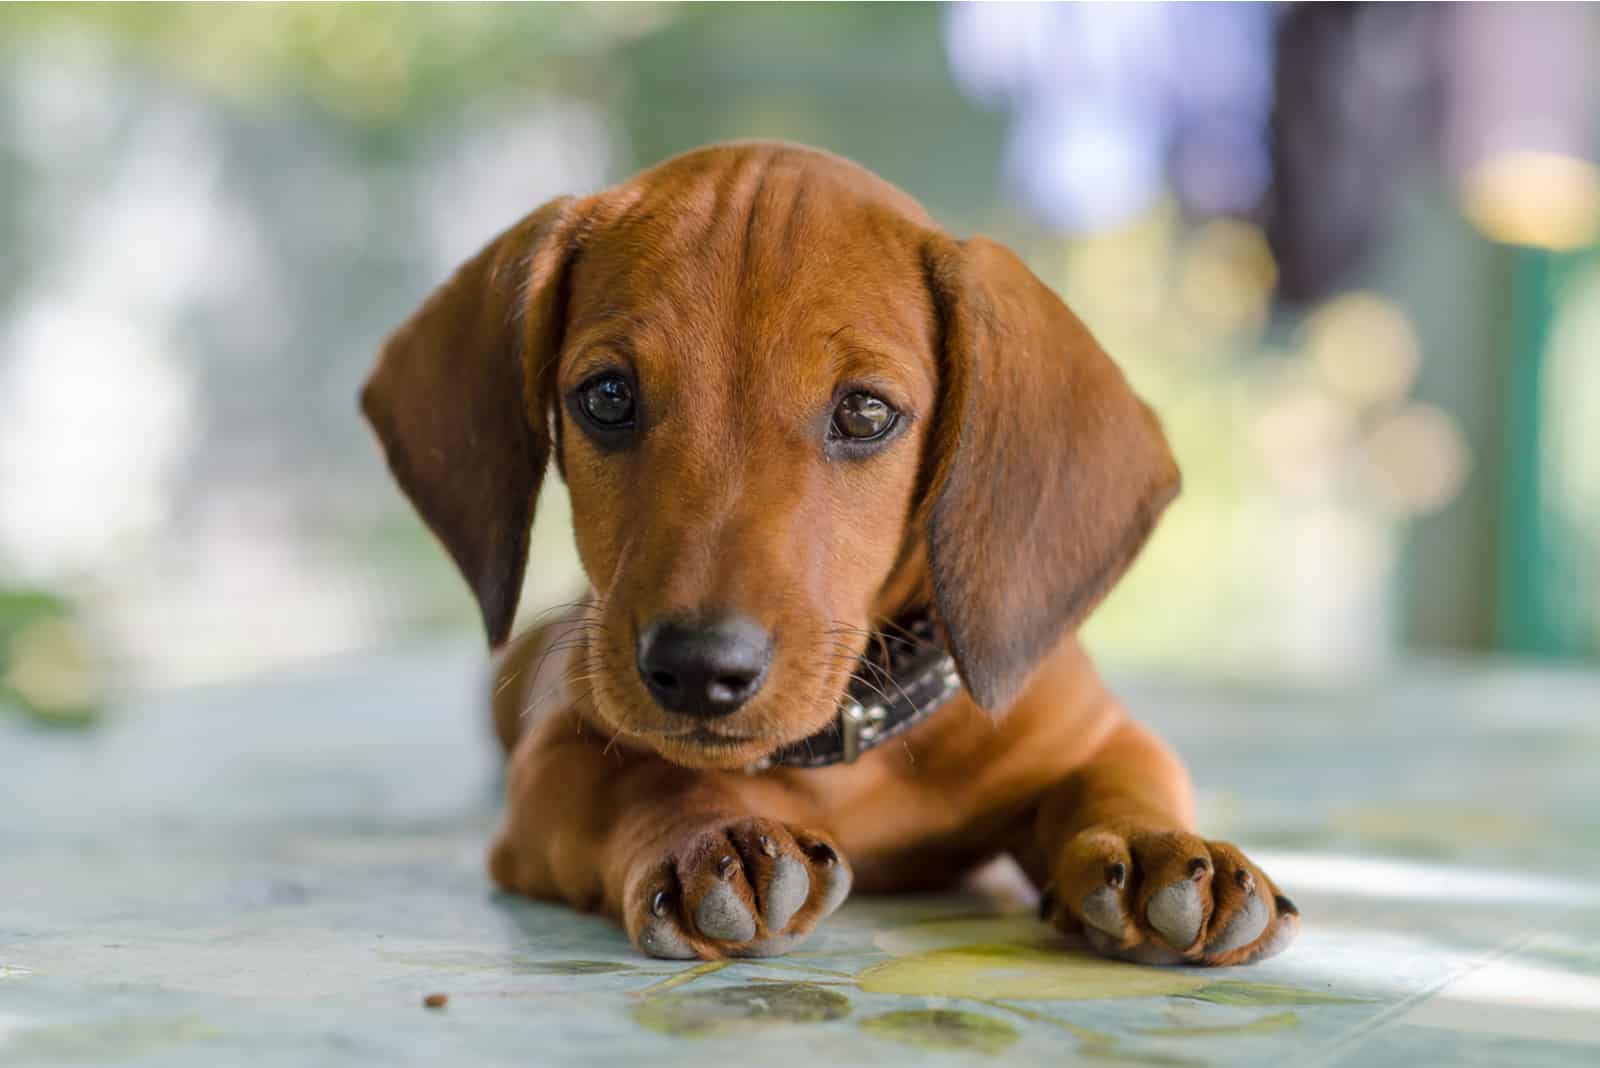 cute miniature dachshund on the floor